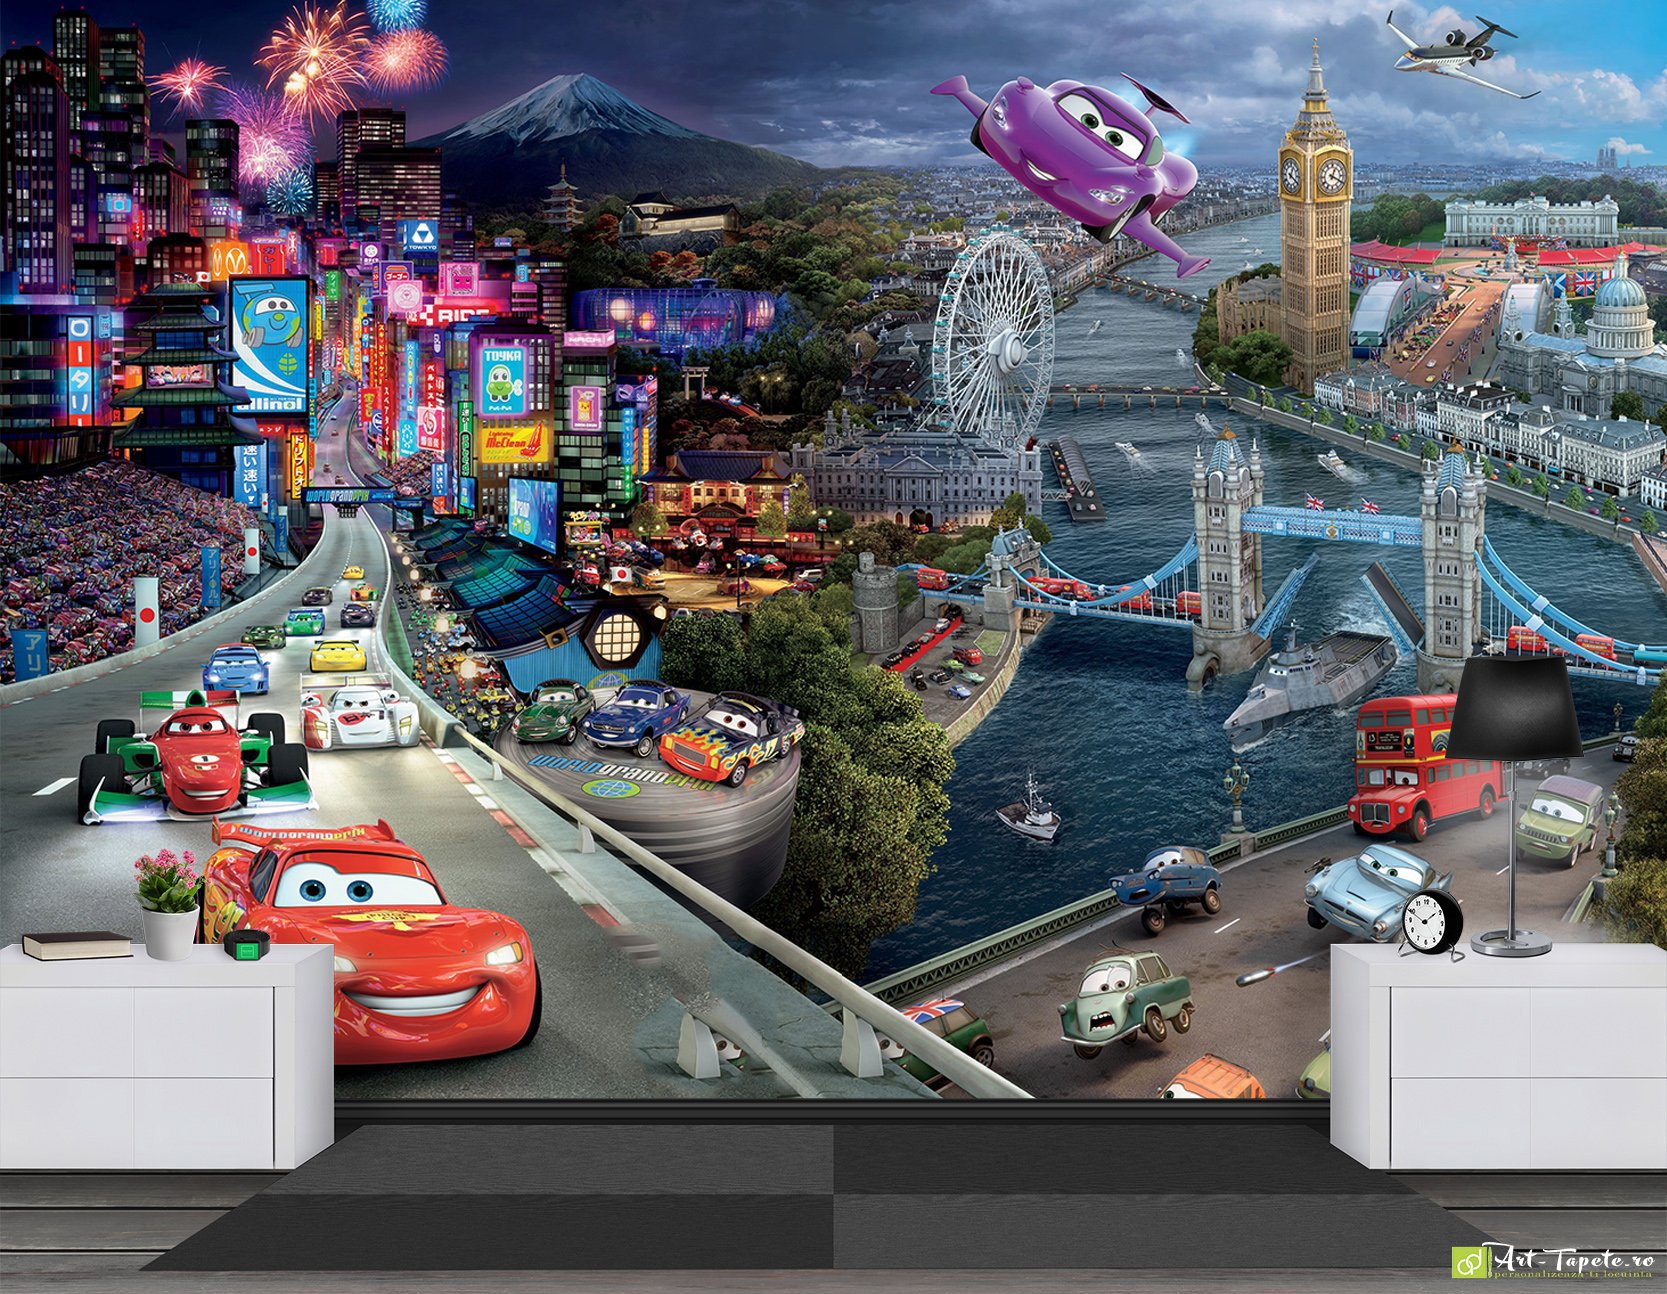 Children's Wallpaper & Wall Murals - Disney, The Cars, Racing in Europe |   Digital Wallpaper mural, 3D Effect Wallpaper for children's  Buy Online